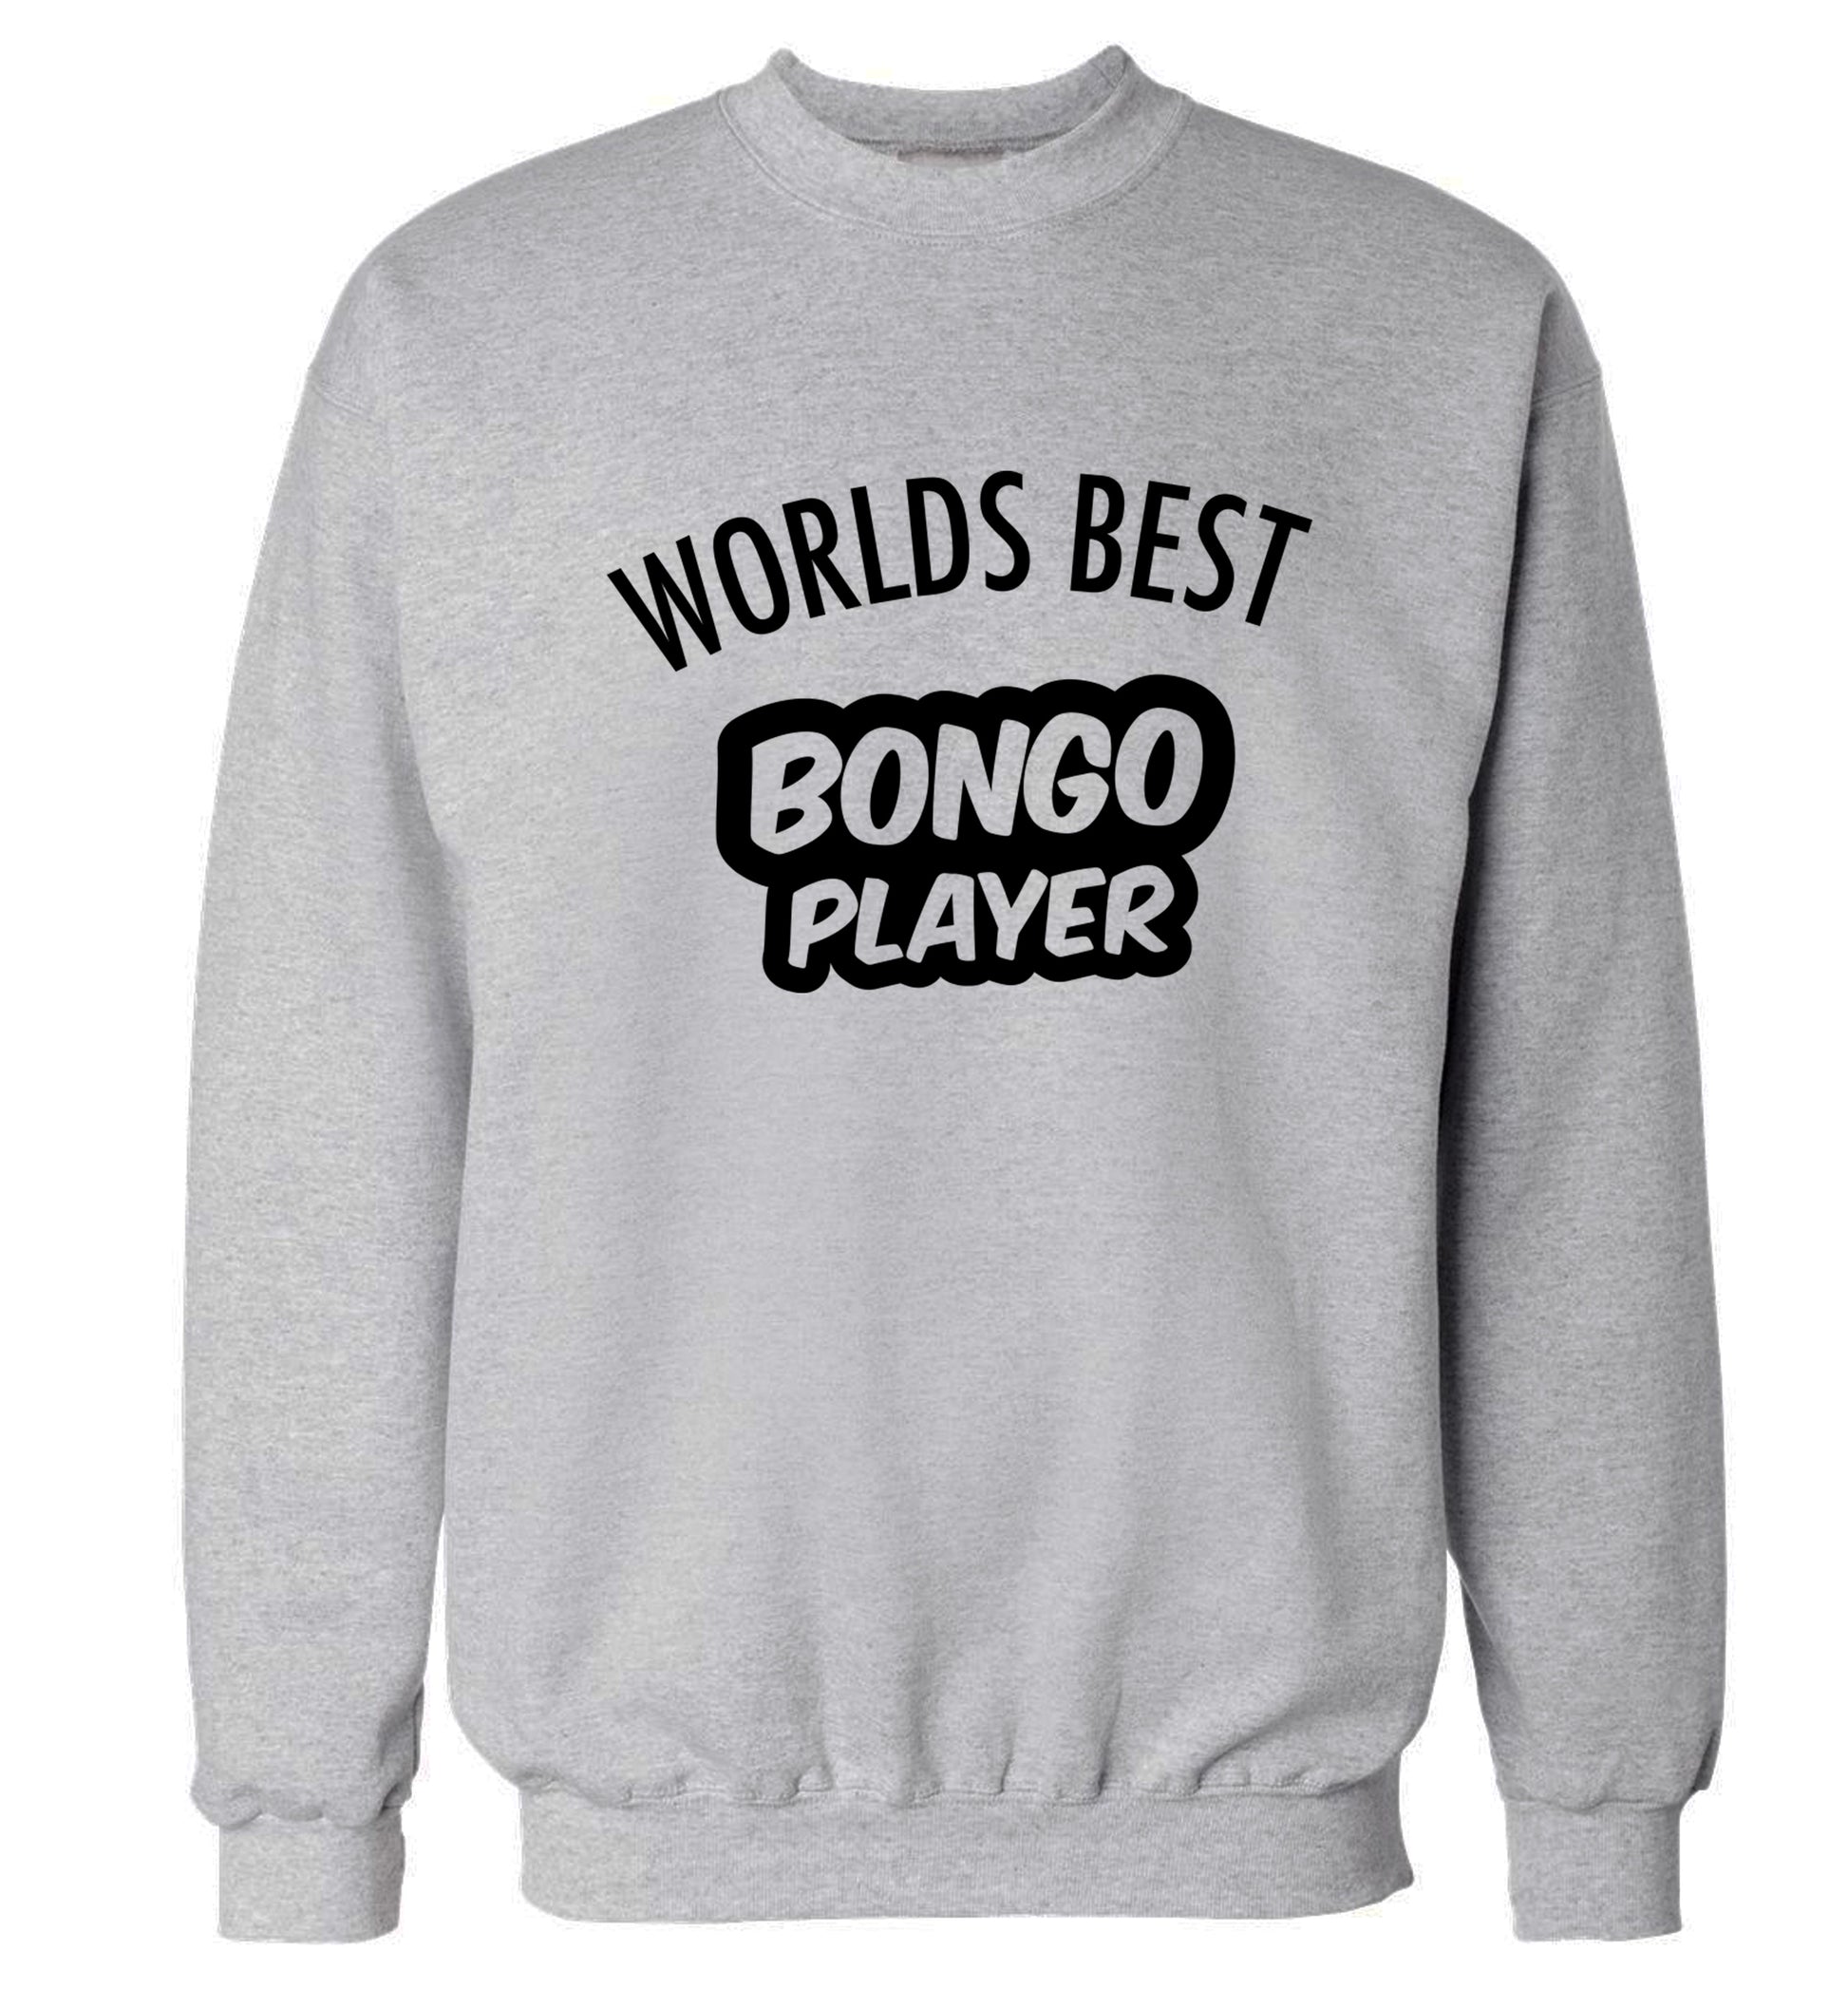 Worlds best bongo player Adult's unisex grey Sweater 2XL